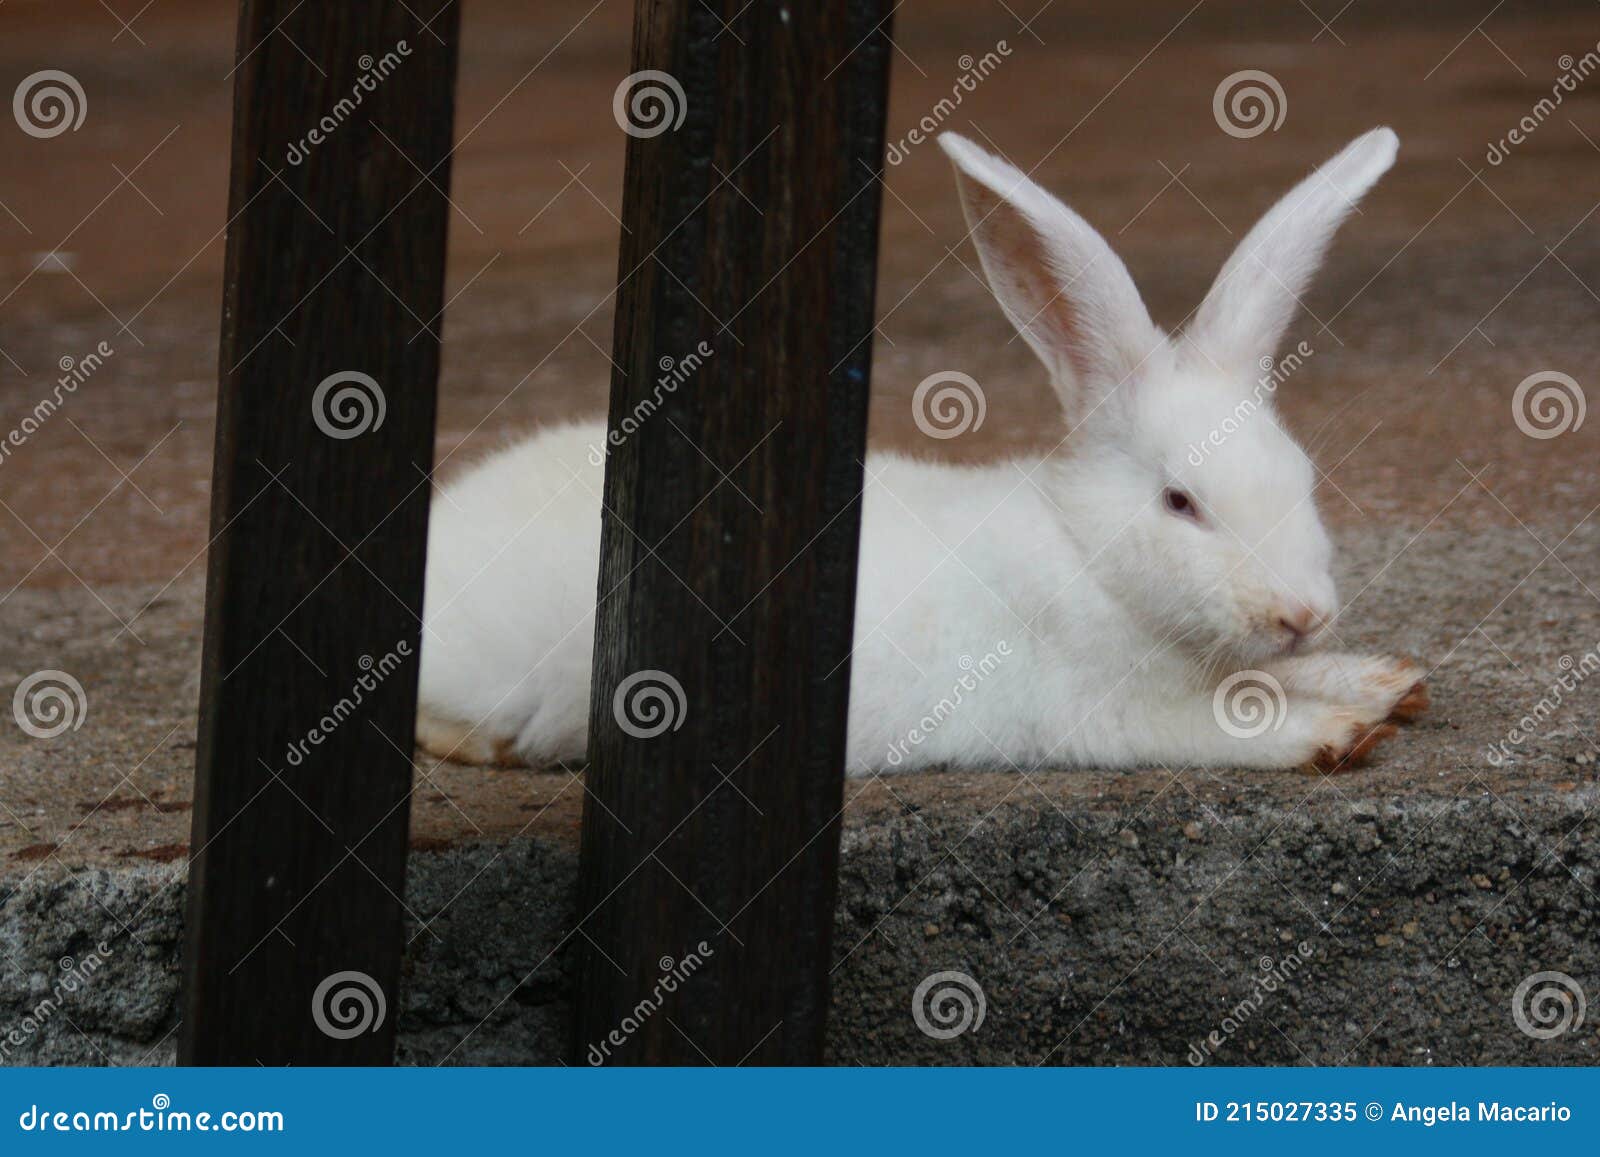 a fluffy white rabbit lying down.